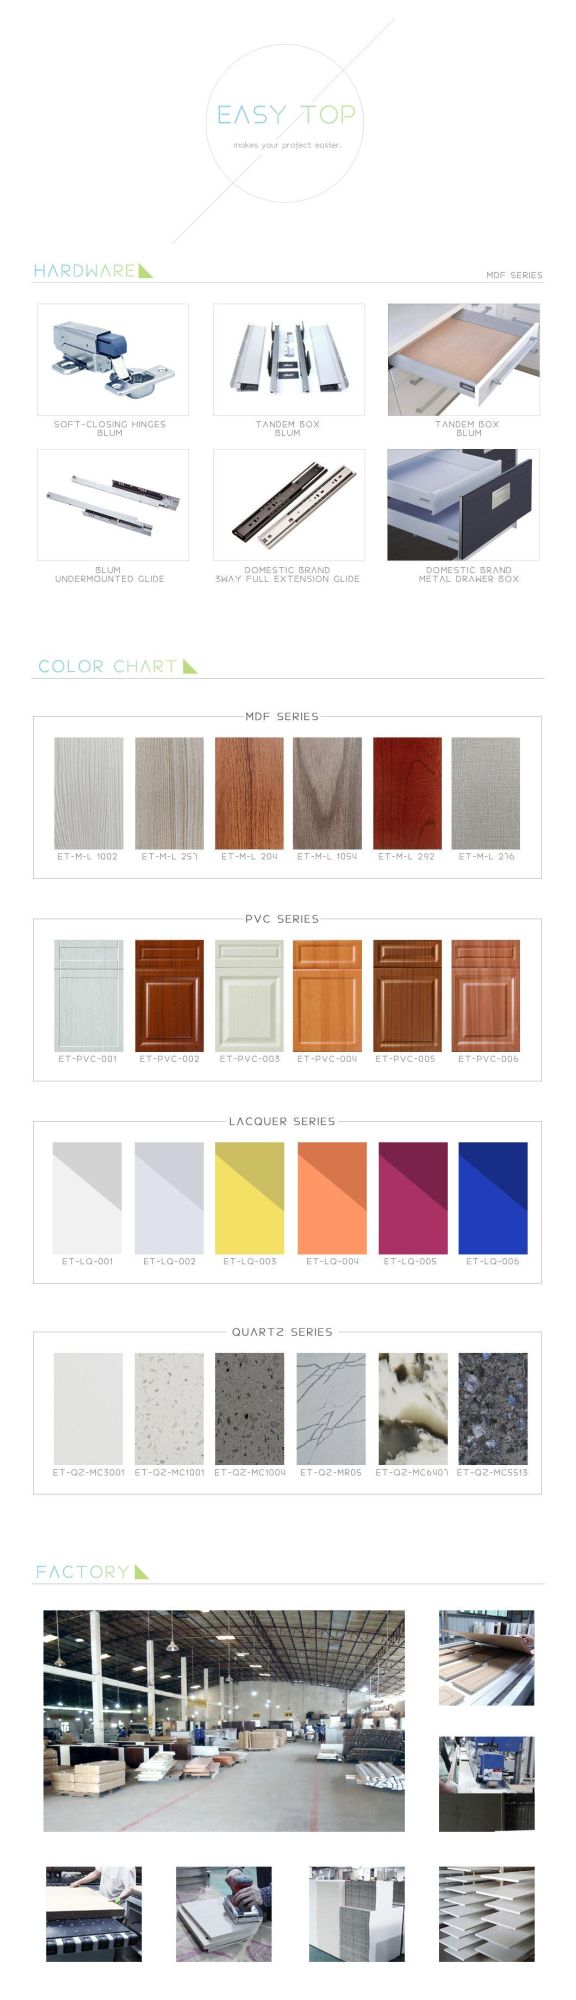 New Luxury Modern Design Matte L-Shaped PVC Door Modular Black Kitchen Cabinets Furniture